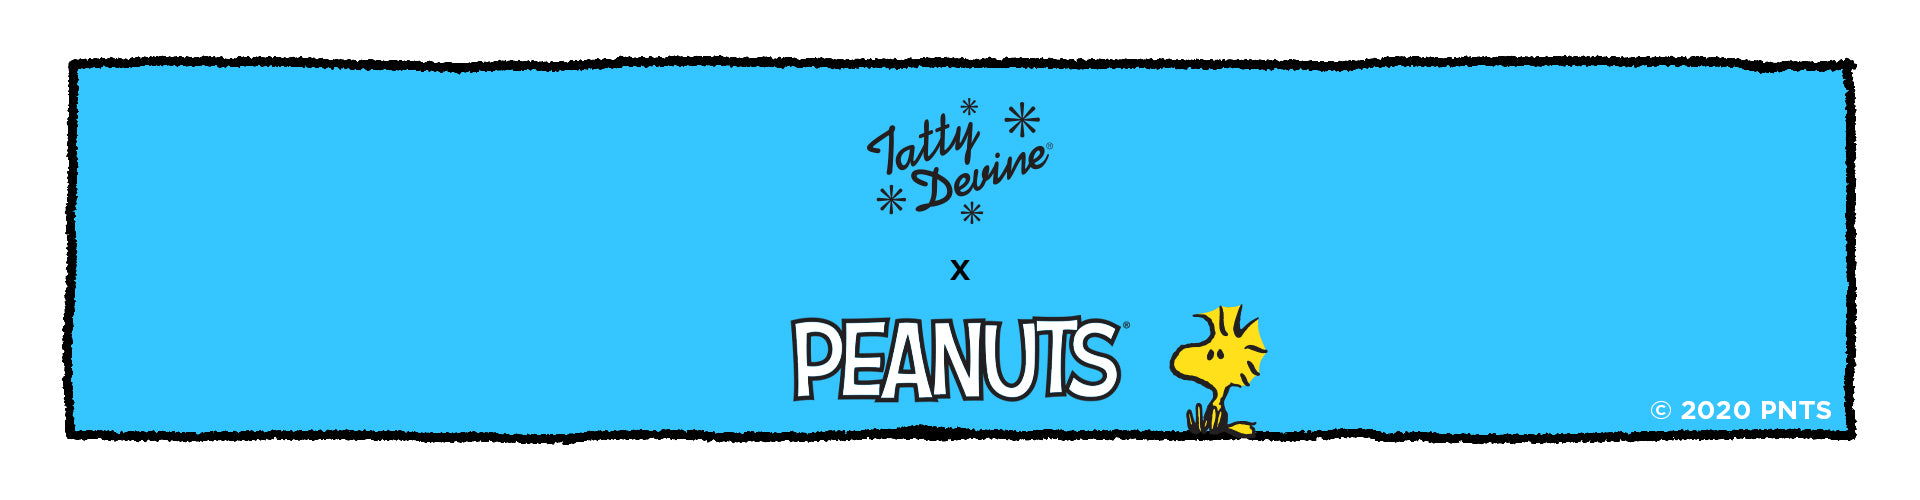 Tatty Devine X Peanuts: The gang's all here!